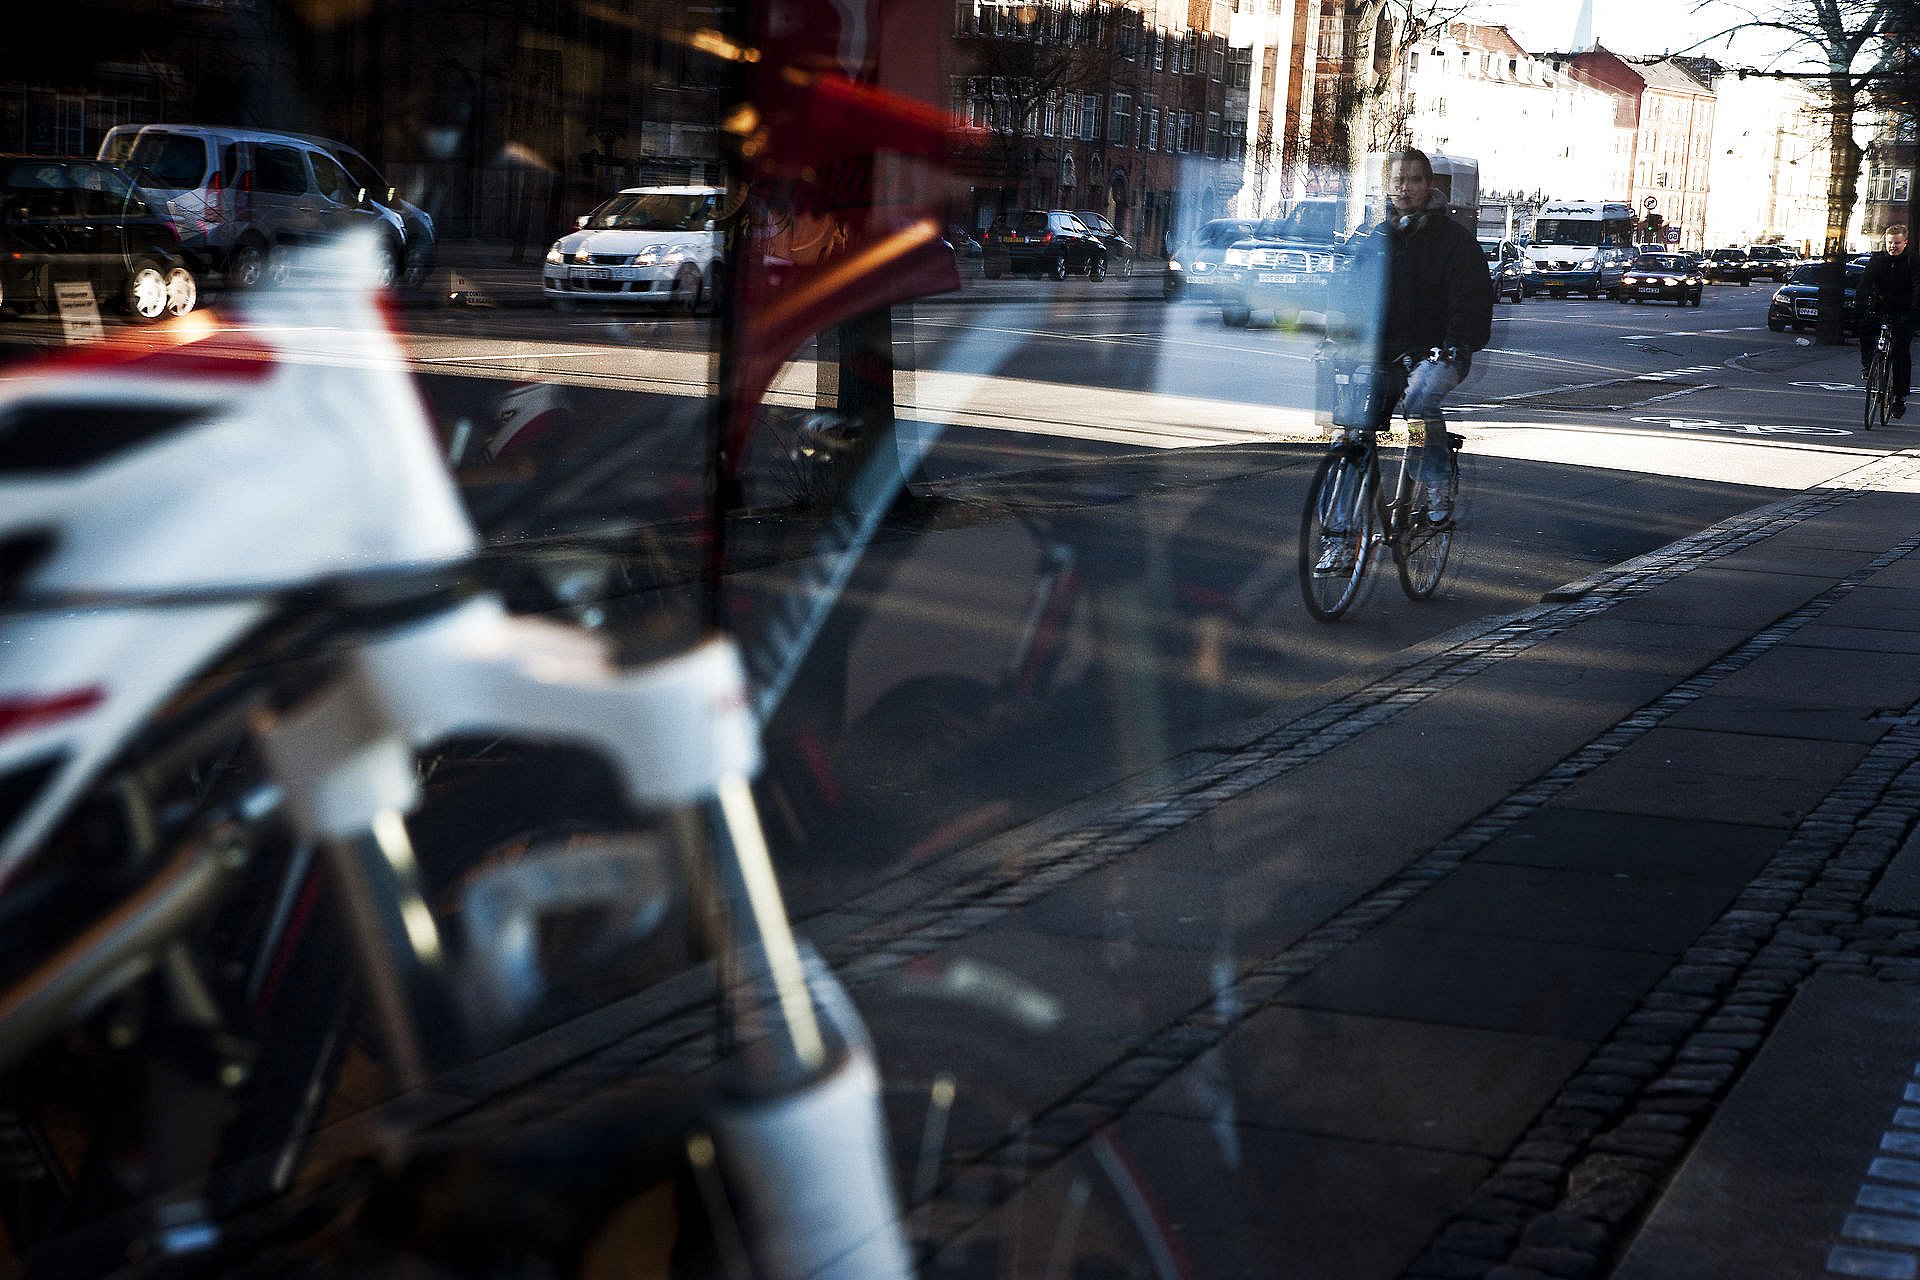 Duchess Sophie dybtgående 31-årig fandt sin stjålne cykel til salg på Den Blå Avis | TV2 Østjylland